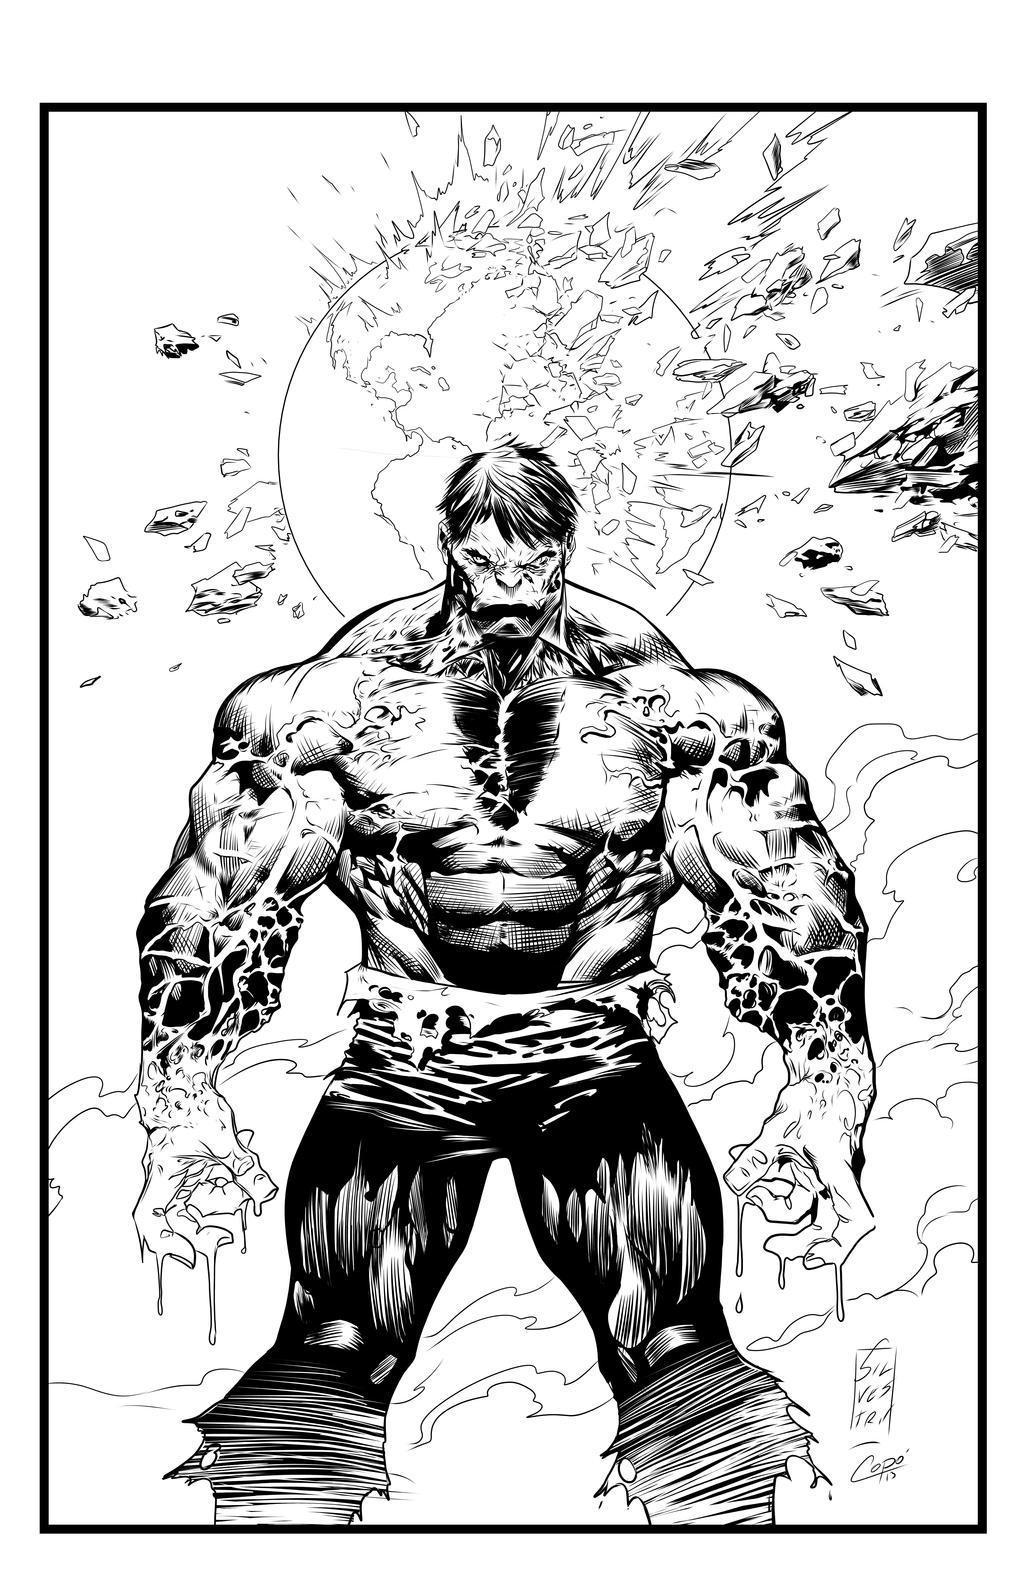 Hulk Cover by jorgecopo on DeviantArt